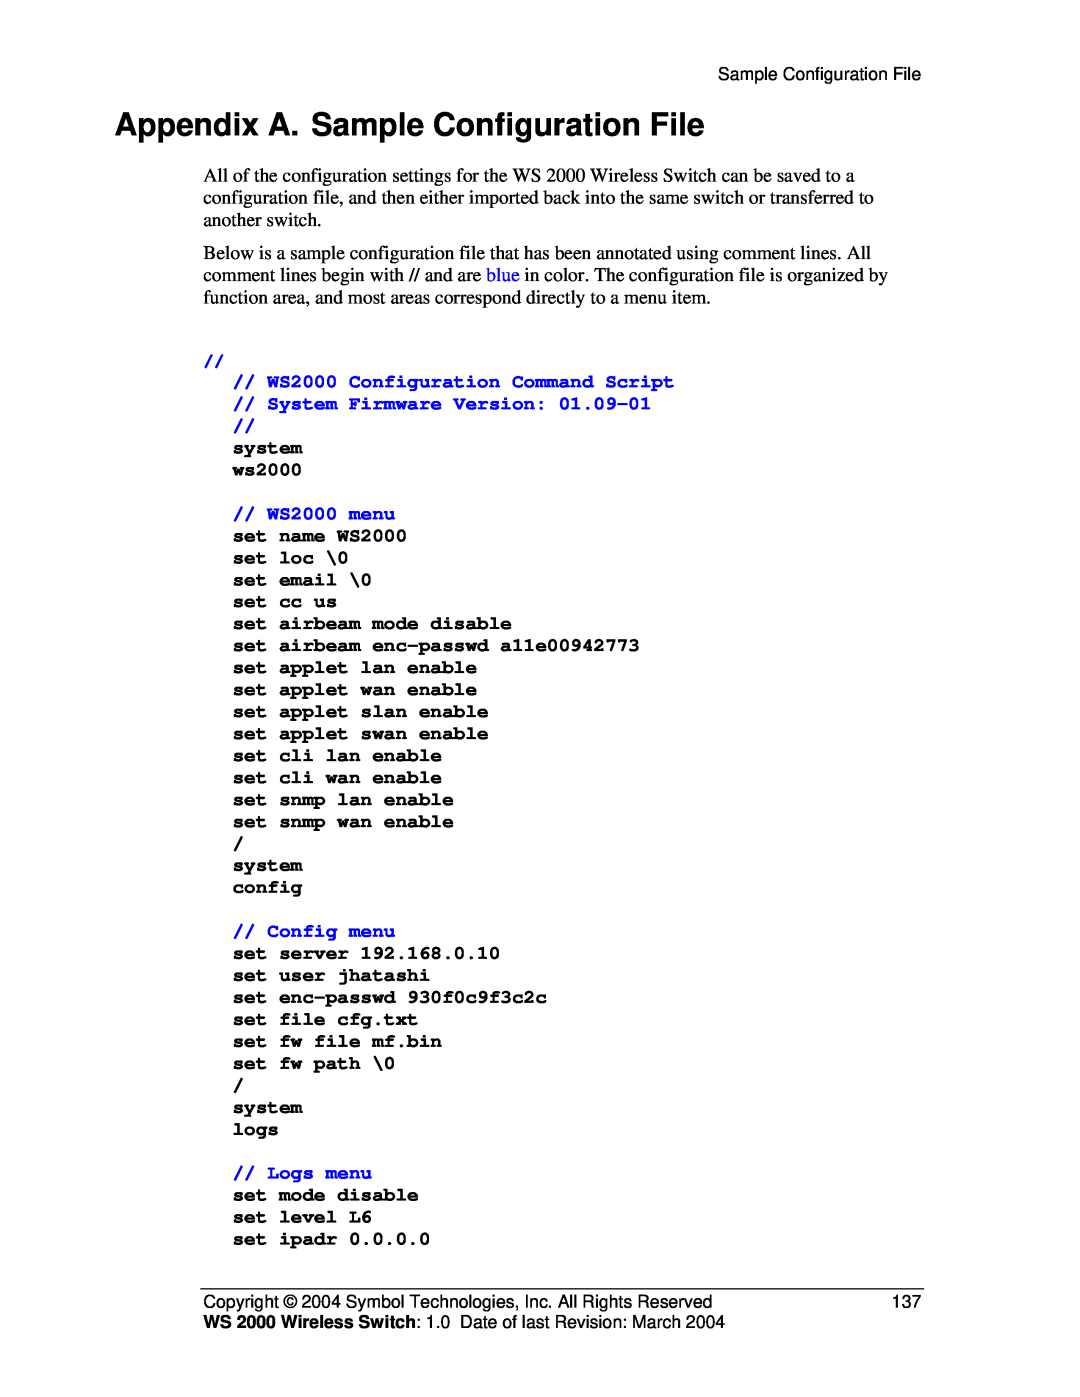 Symbol Technologies WS 2000 manual Appendix A. Sample Configuration File, WS2000 menu, Config menu, Logs menu 